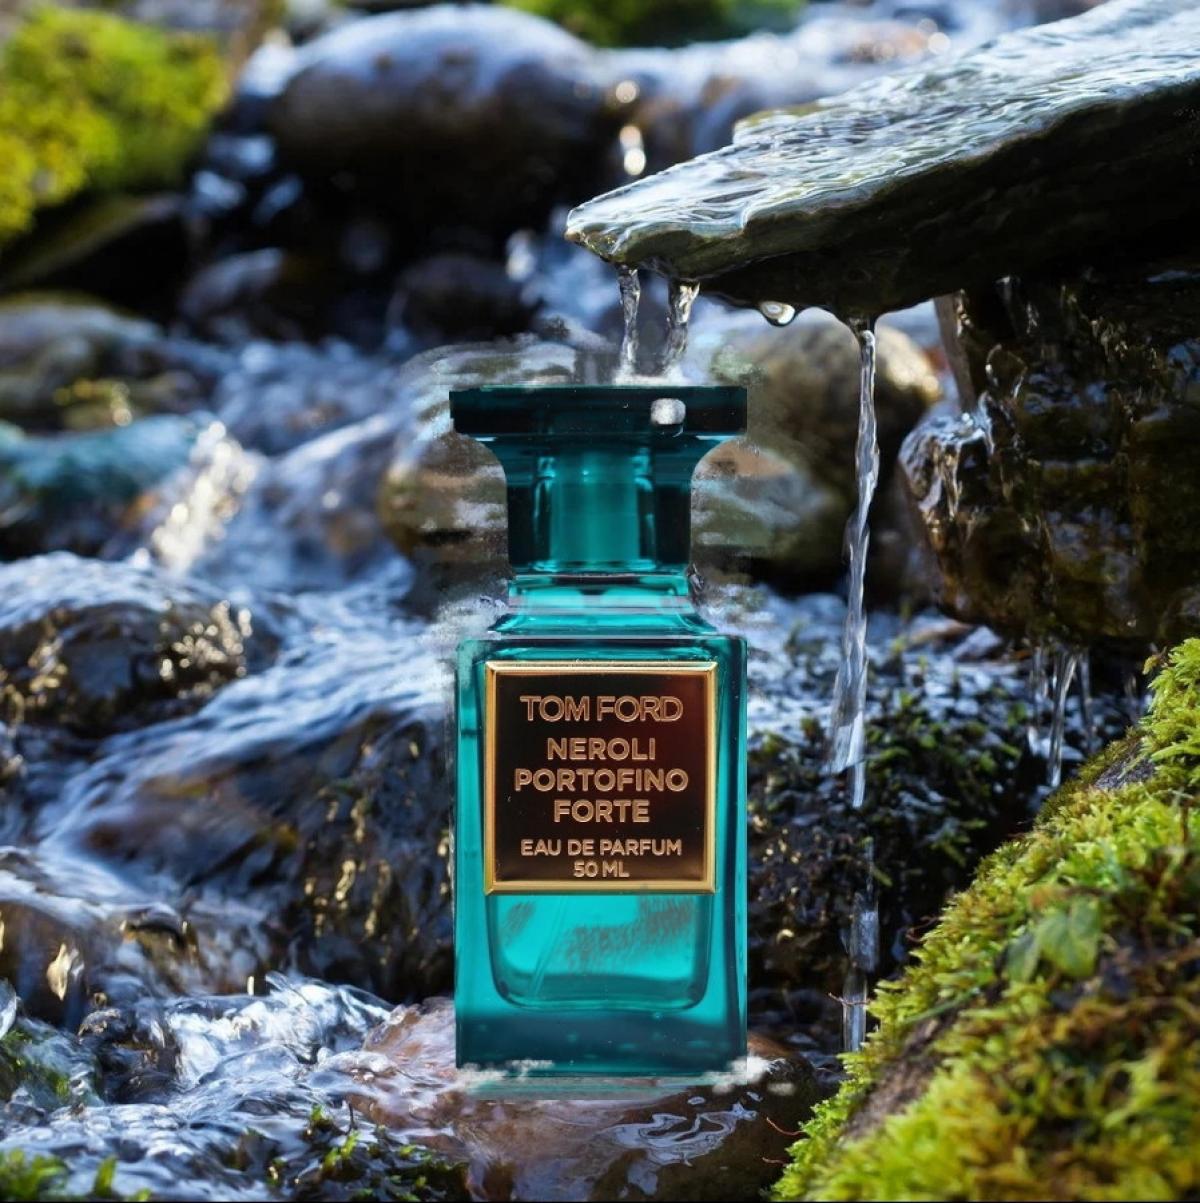 Neroli Portofino Tom Ford perfume - a fragrância Compartilhável 2011